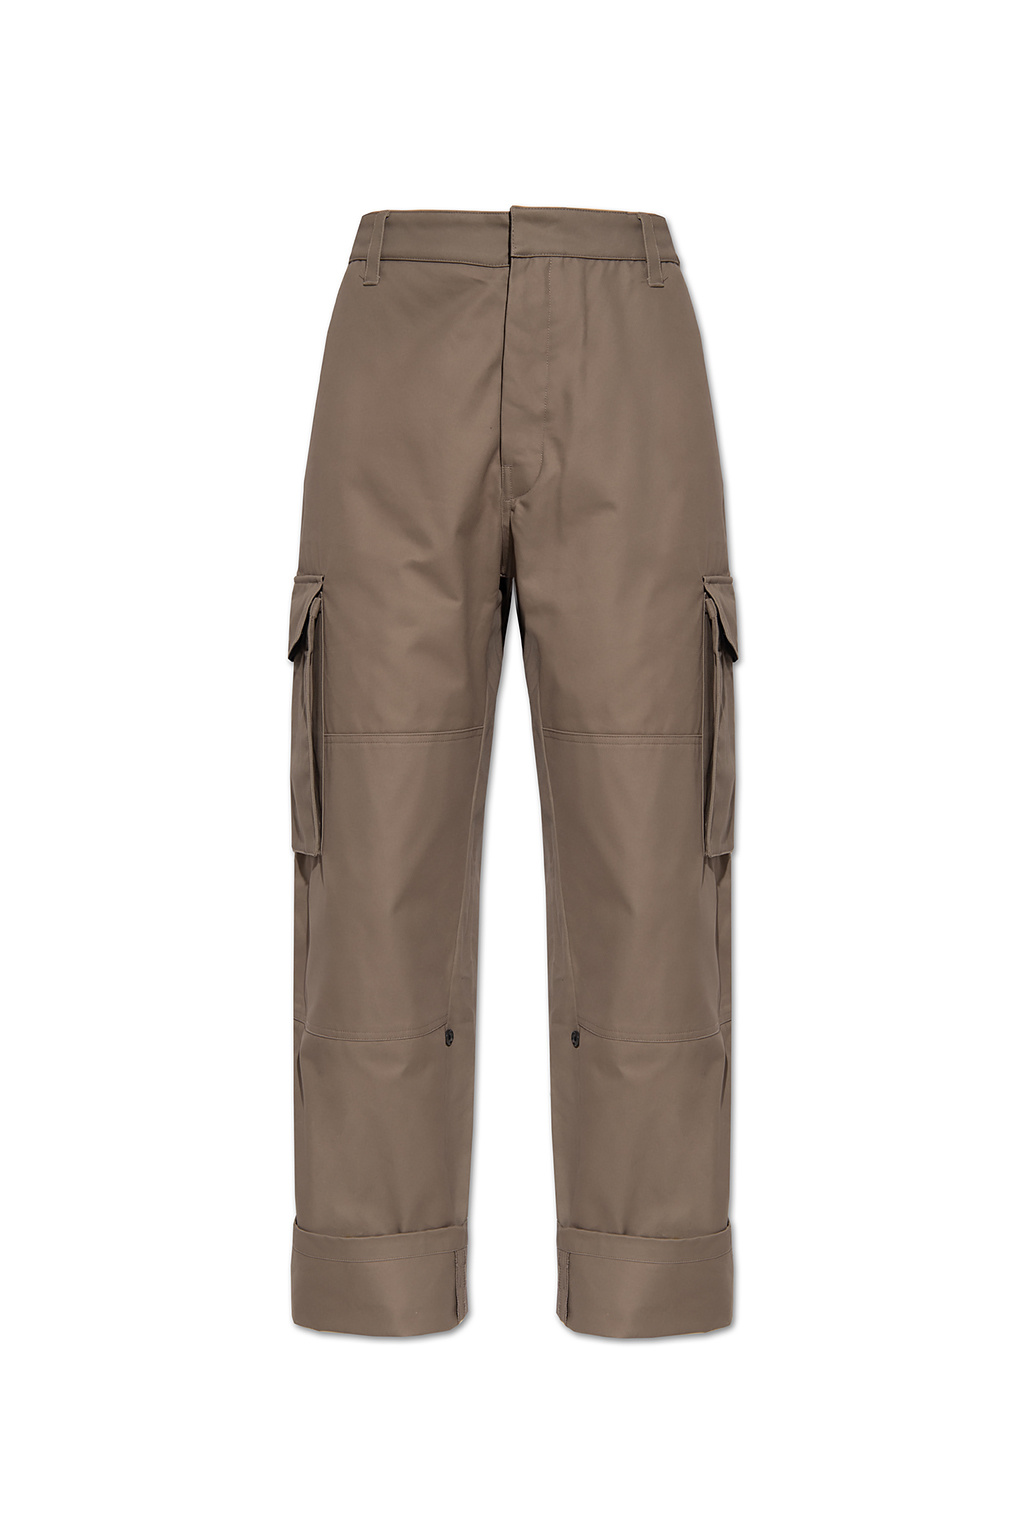 Loewe Cargo Bear trousers